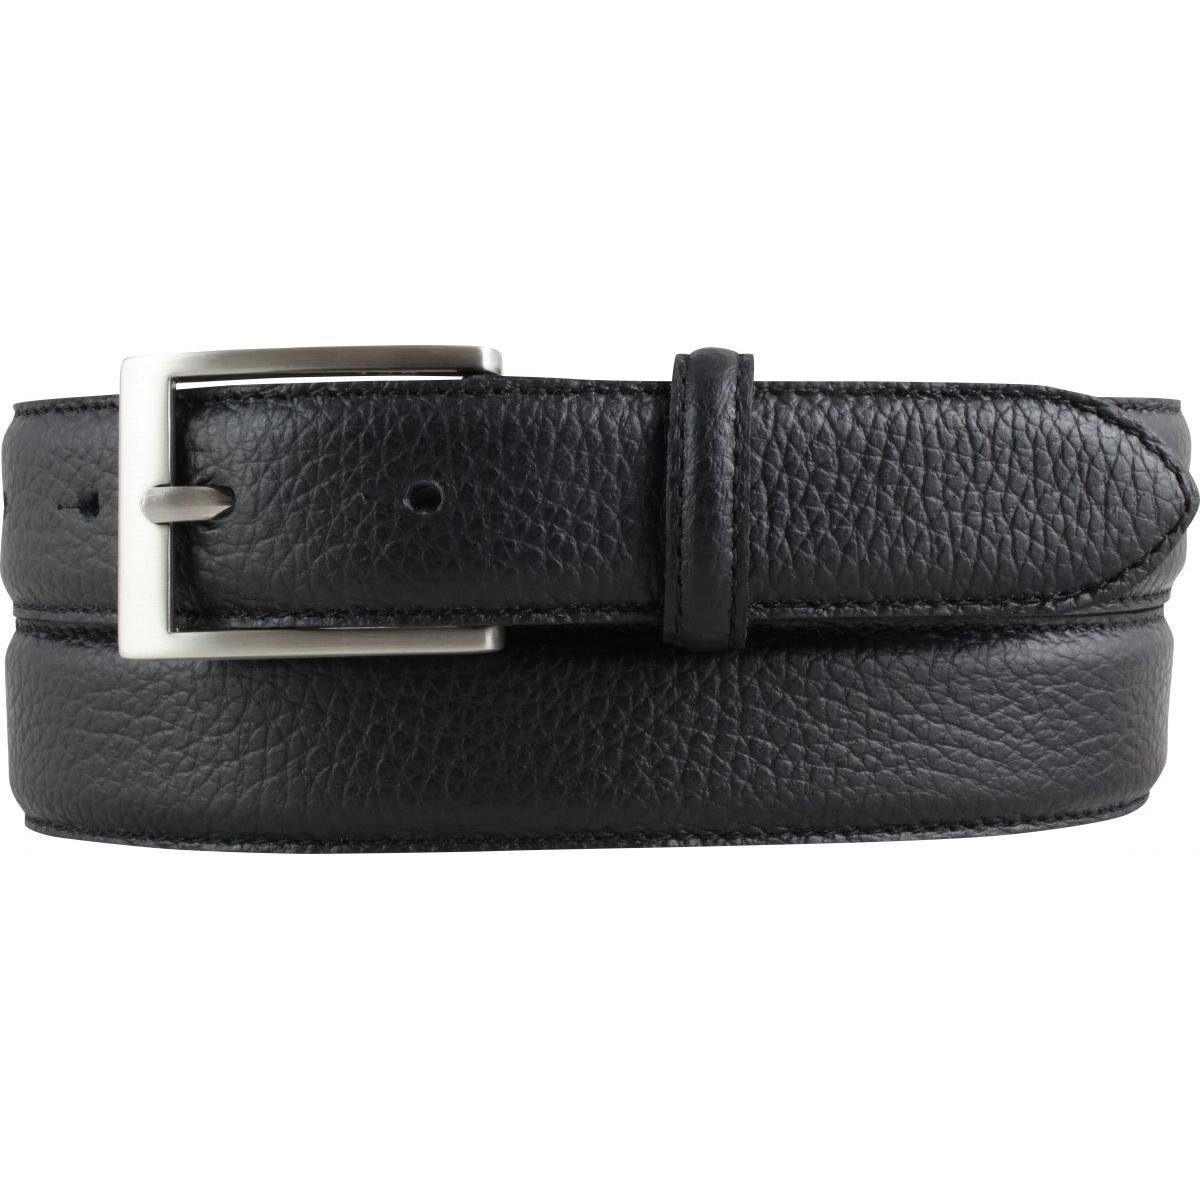 Herren, Silber Anzuggürtel, mm Schwarz, BELTINGER Ledergürtel Anzug-Gürtel, Hosengür Italienischer breit, 30